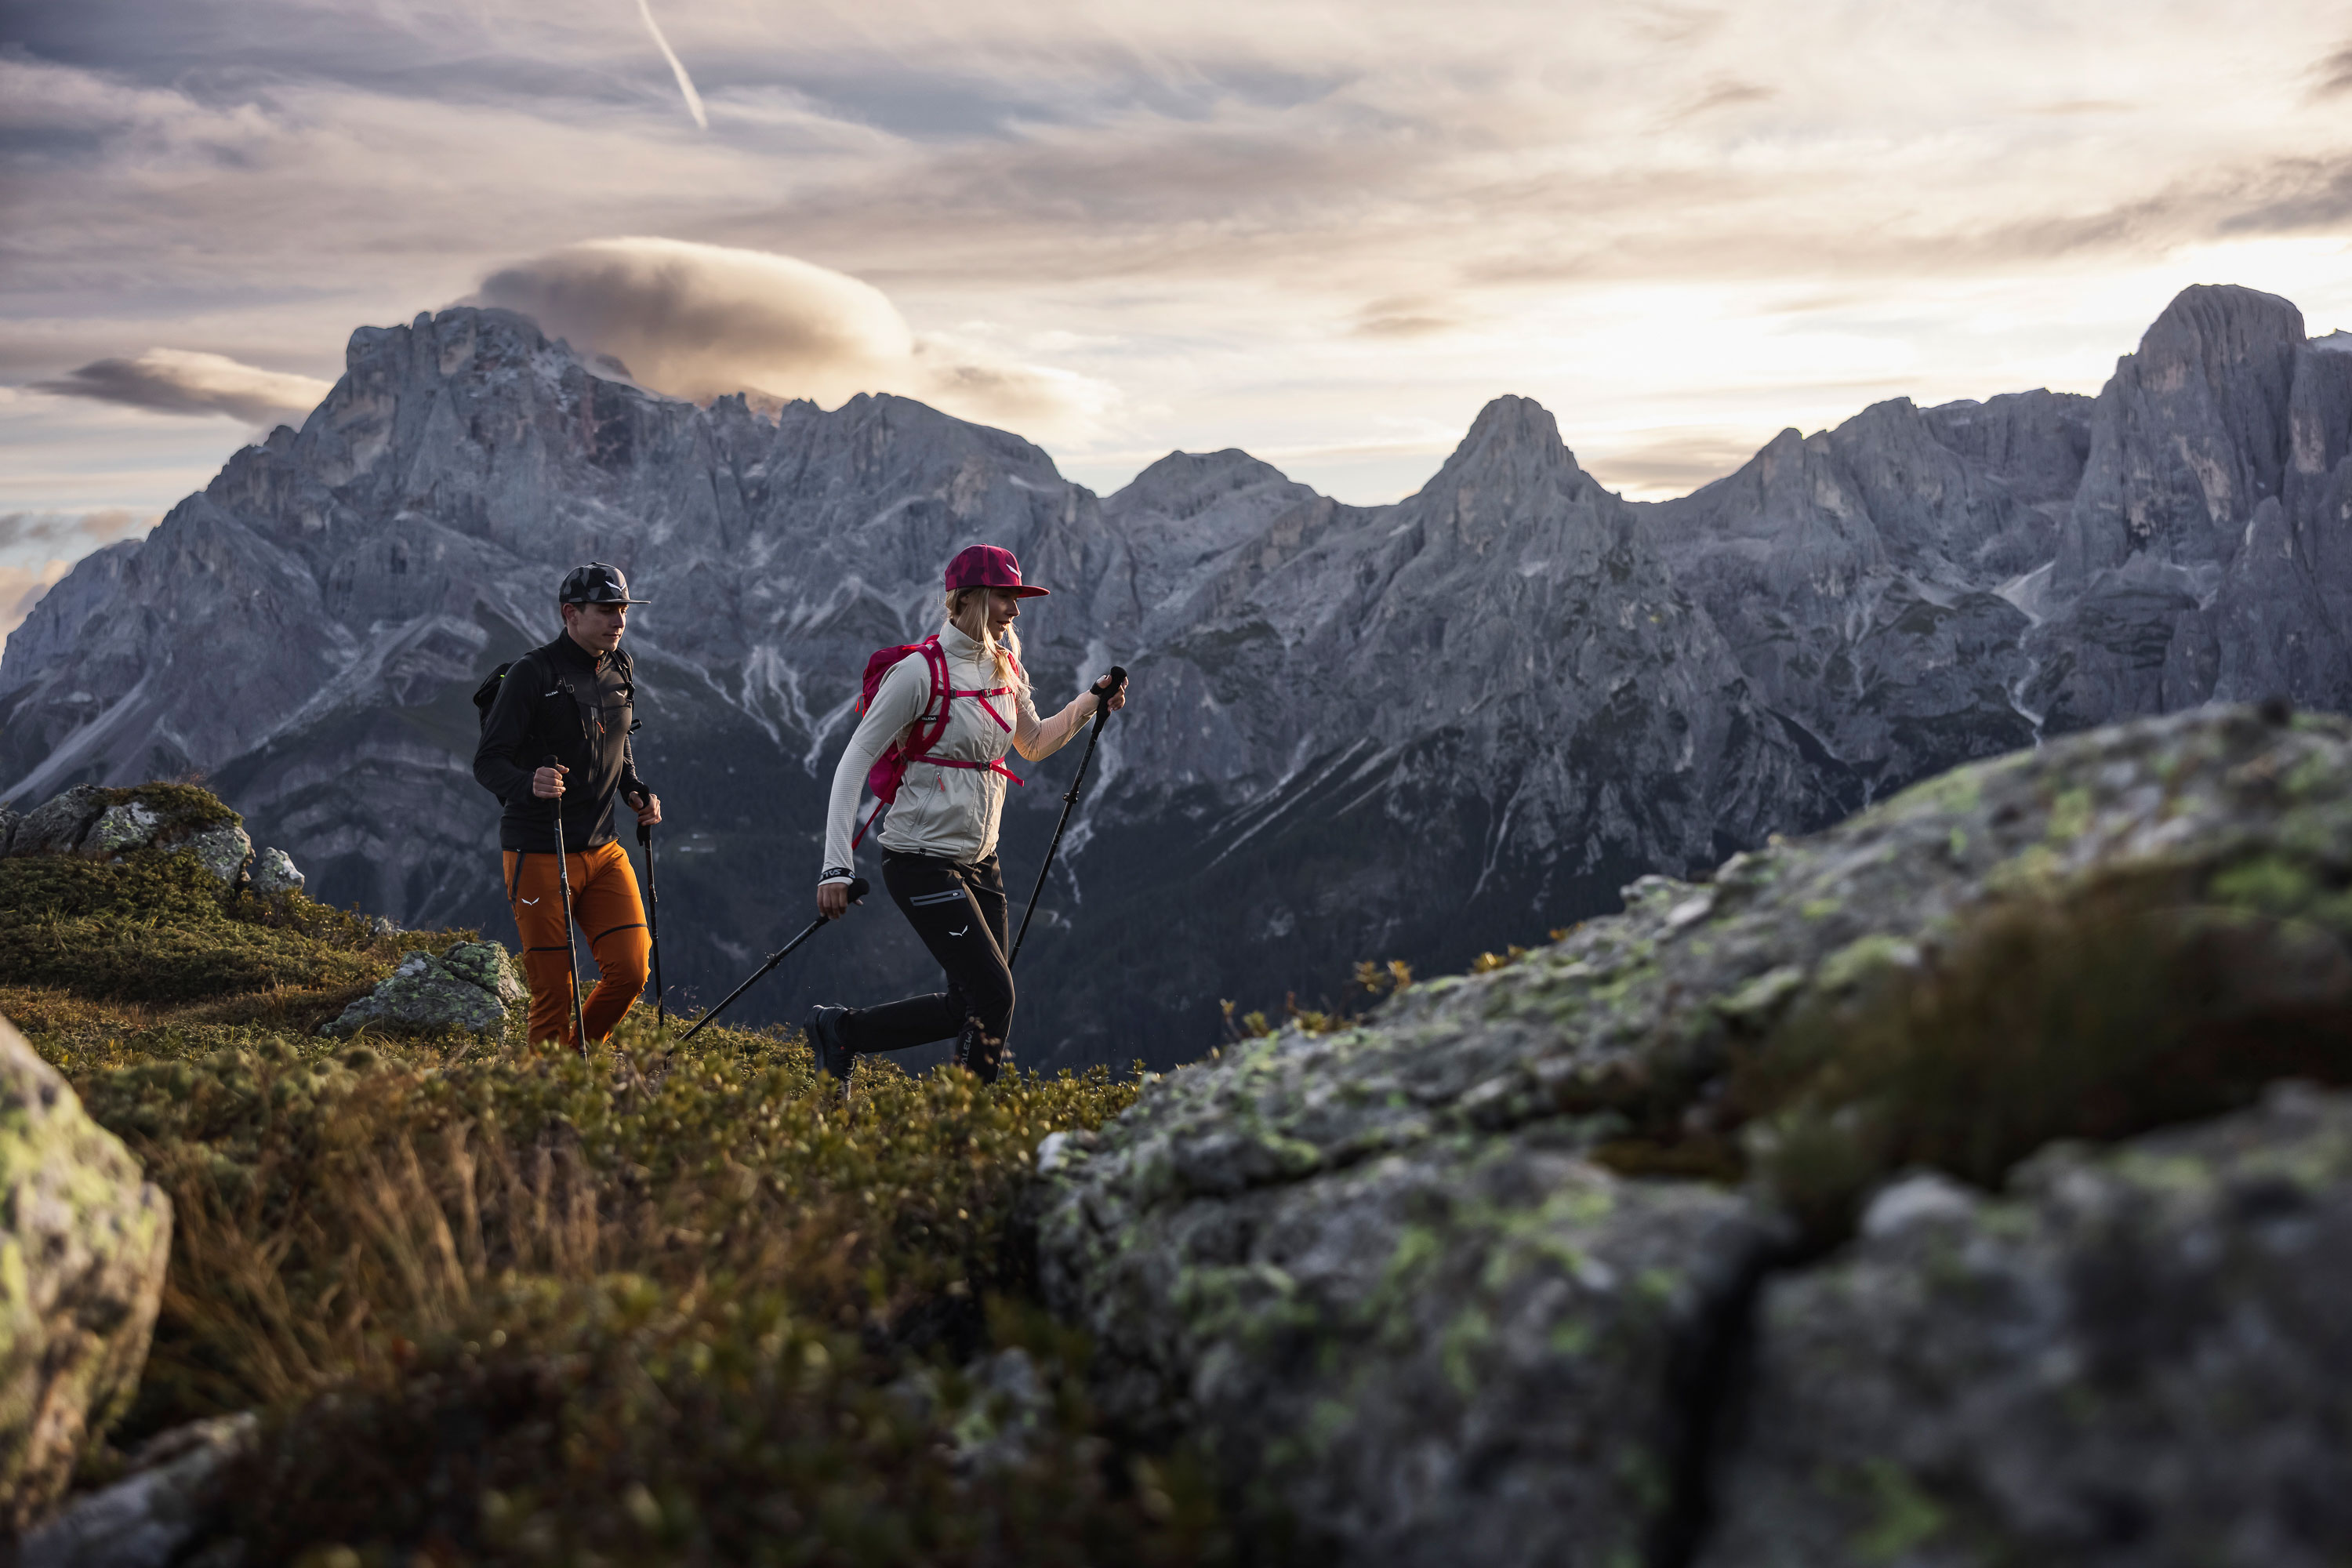 Pärchen beim Wandern in den Alpen | © Daniele Molineris